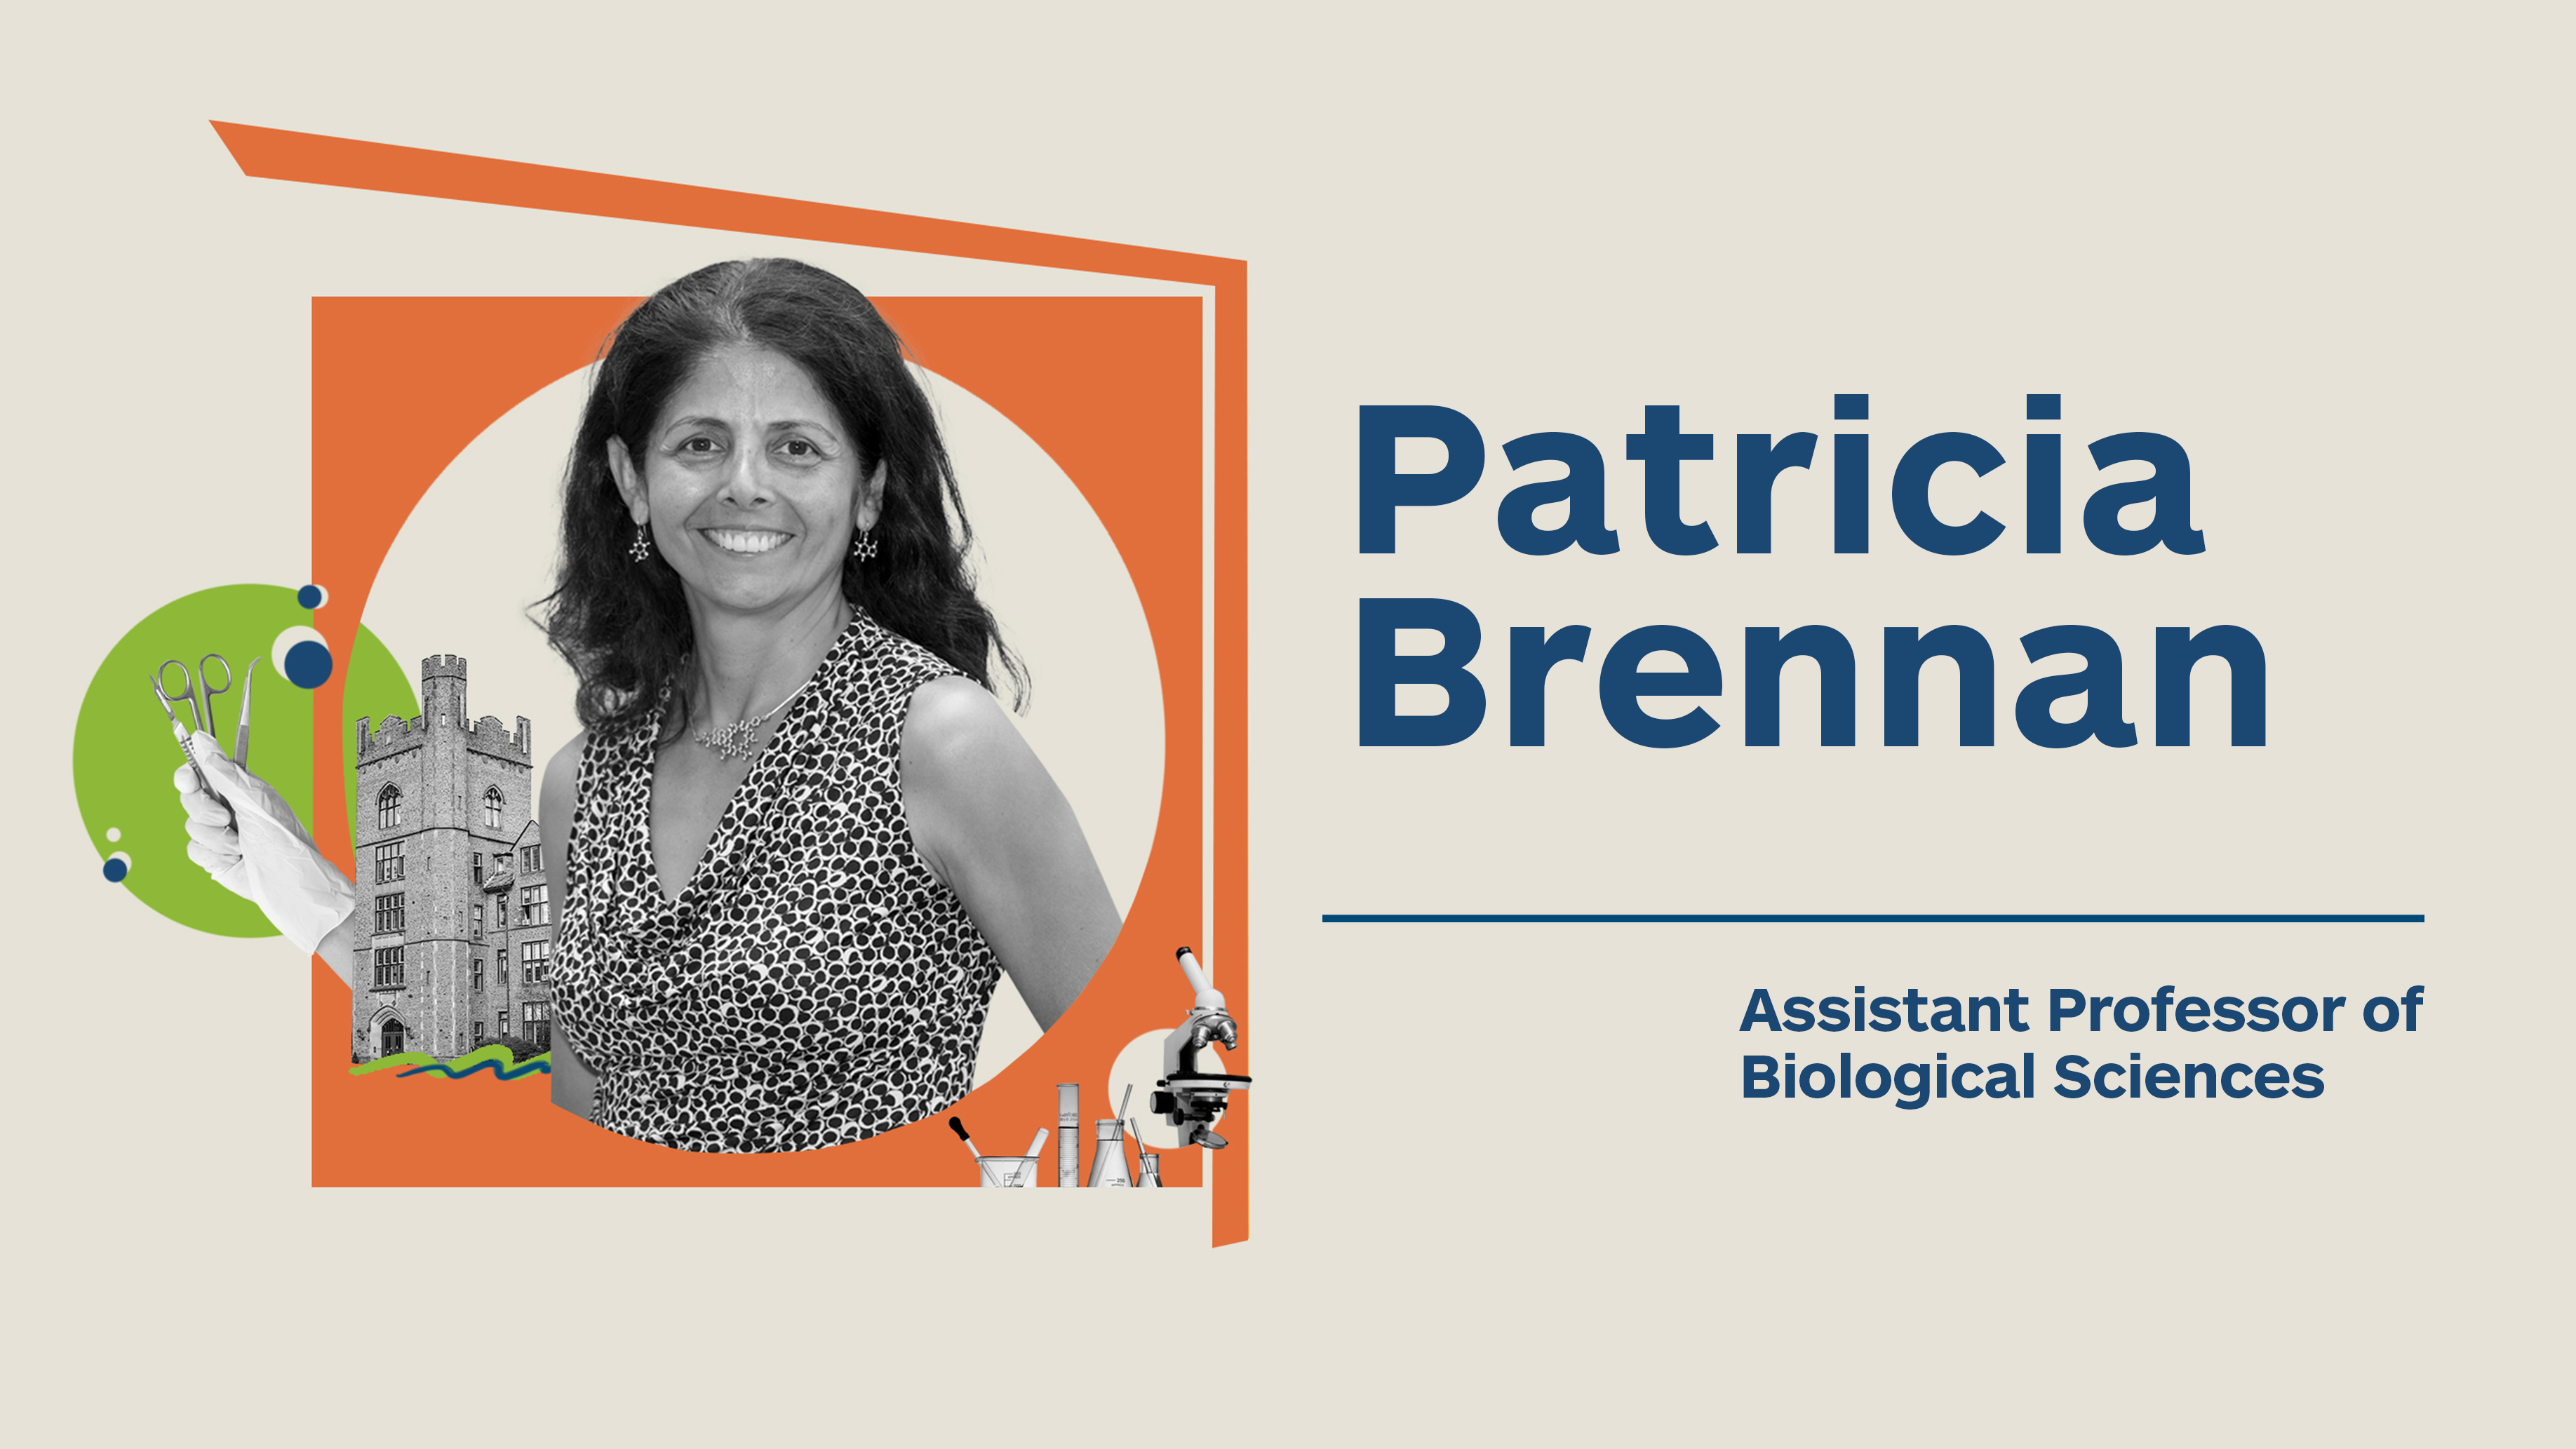 Patricia Brennan, Assistant Professor of Biological Sciences